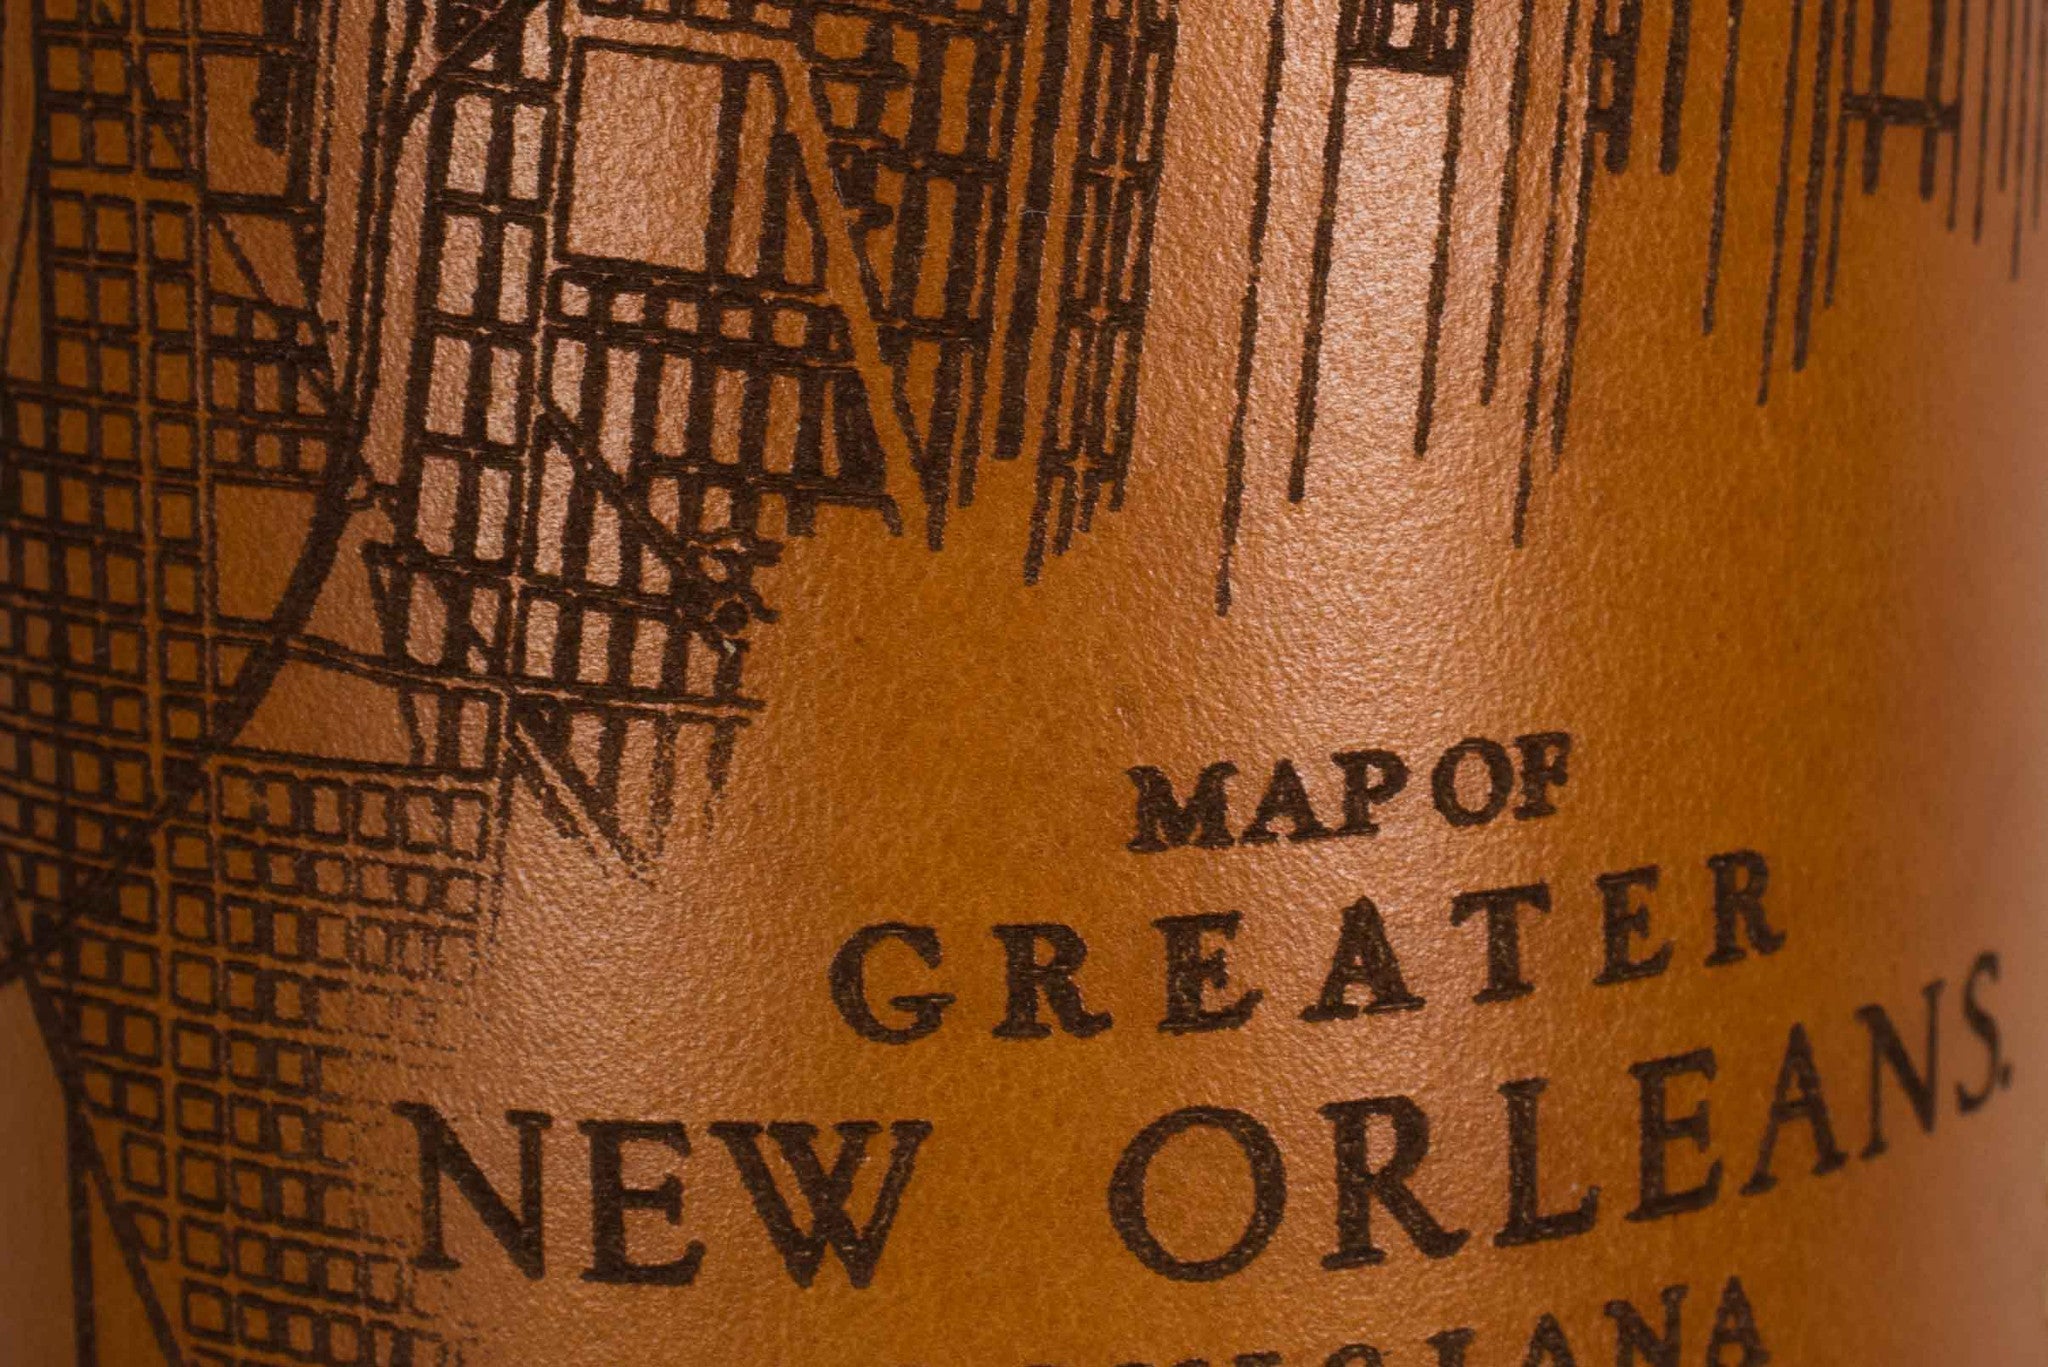 New Orleans Map Travel Mug